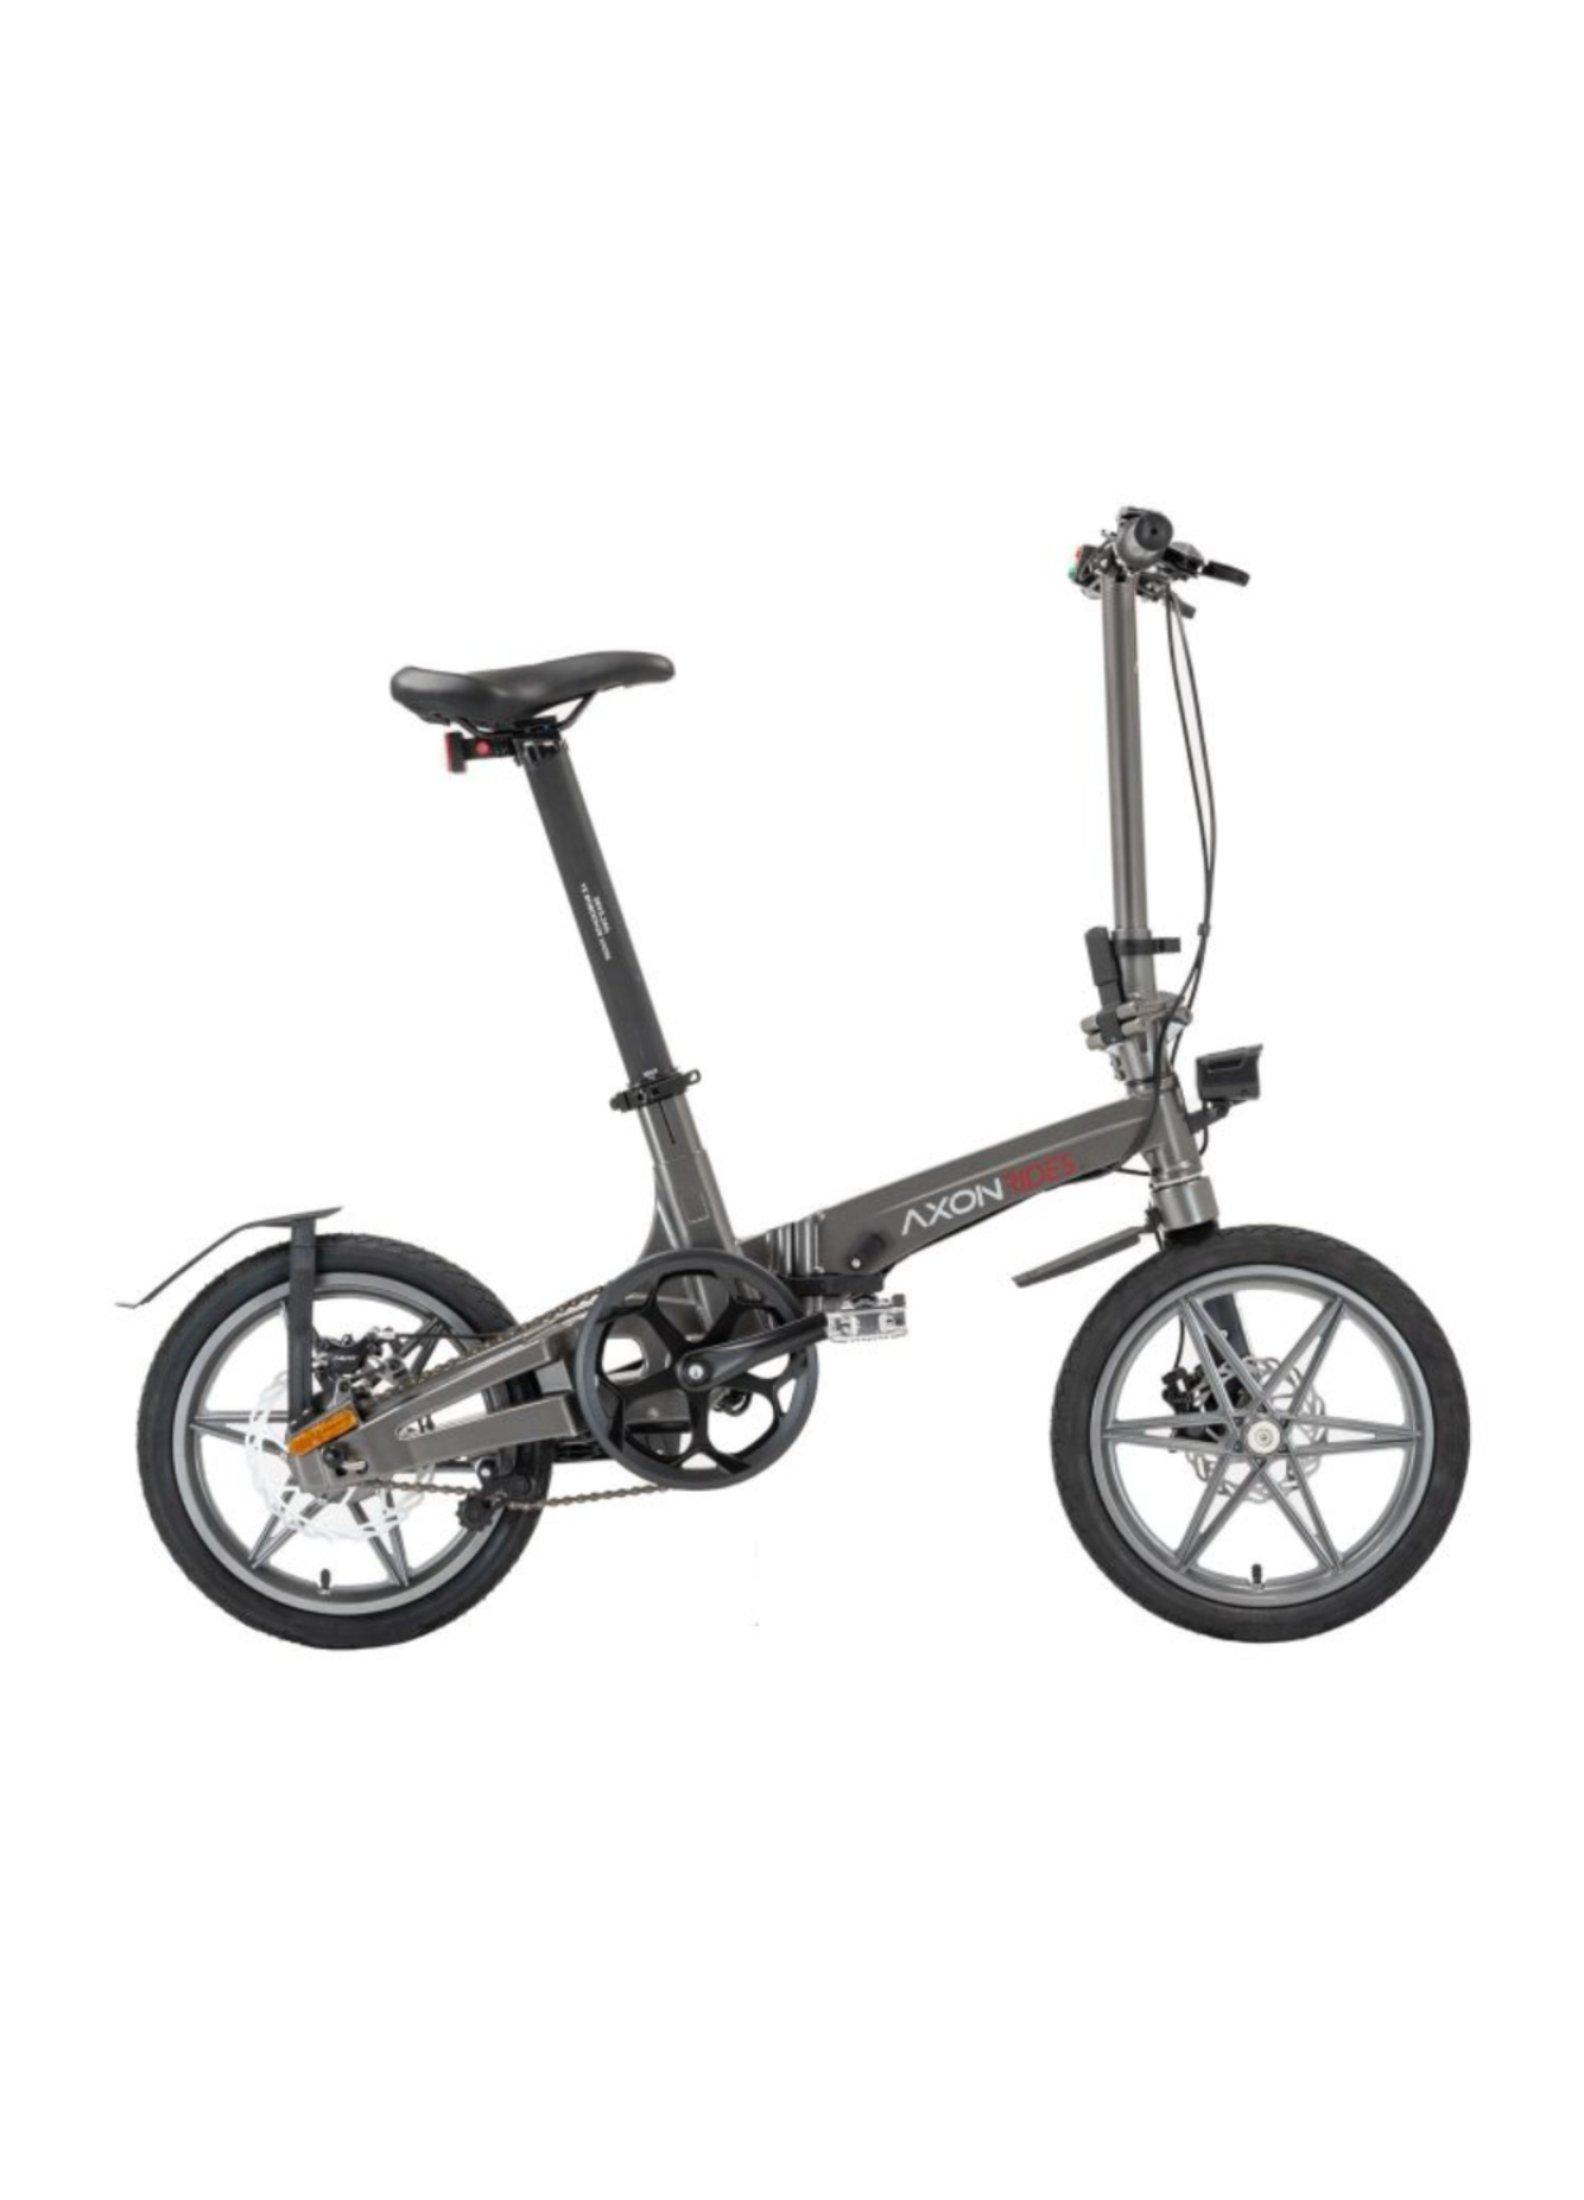 Axon Rides Pro Lightweight Folding Electric Bike - Grey